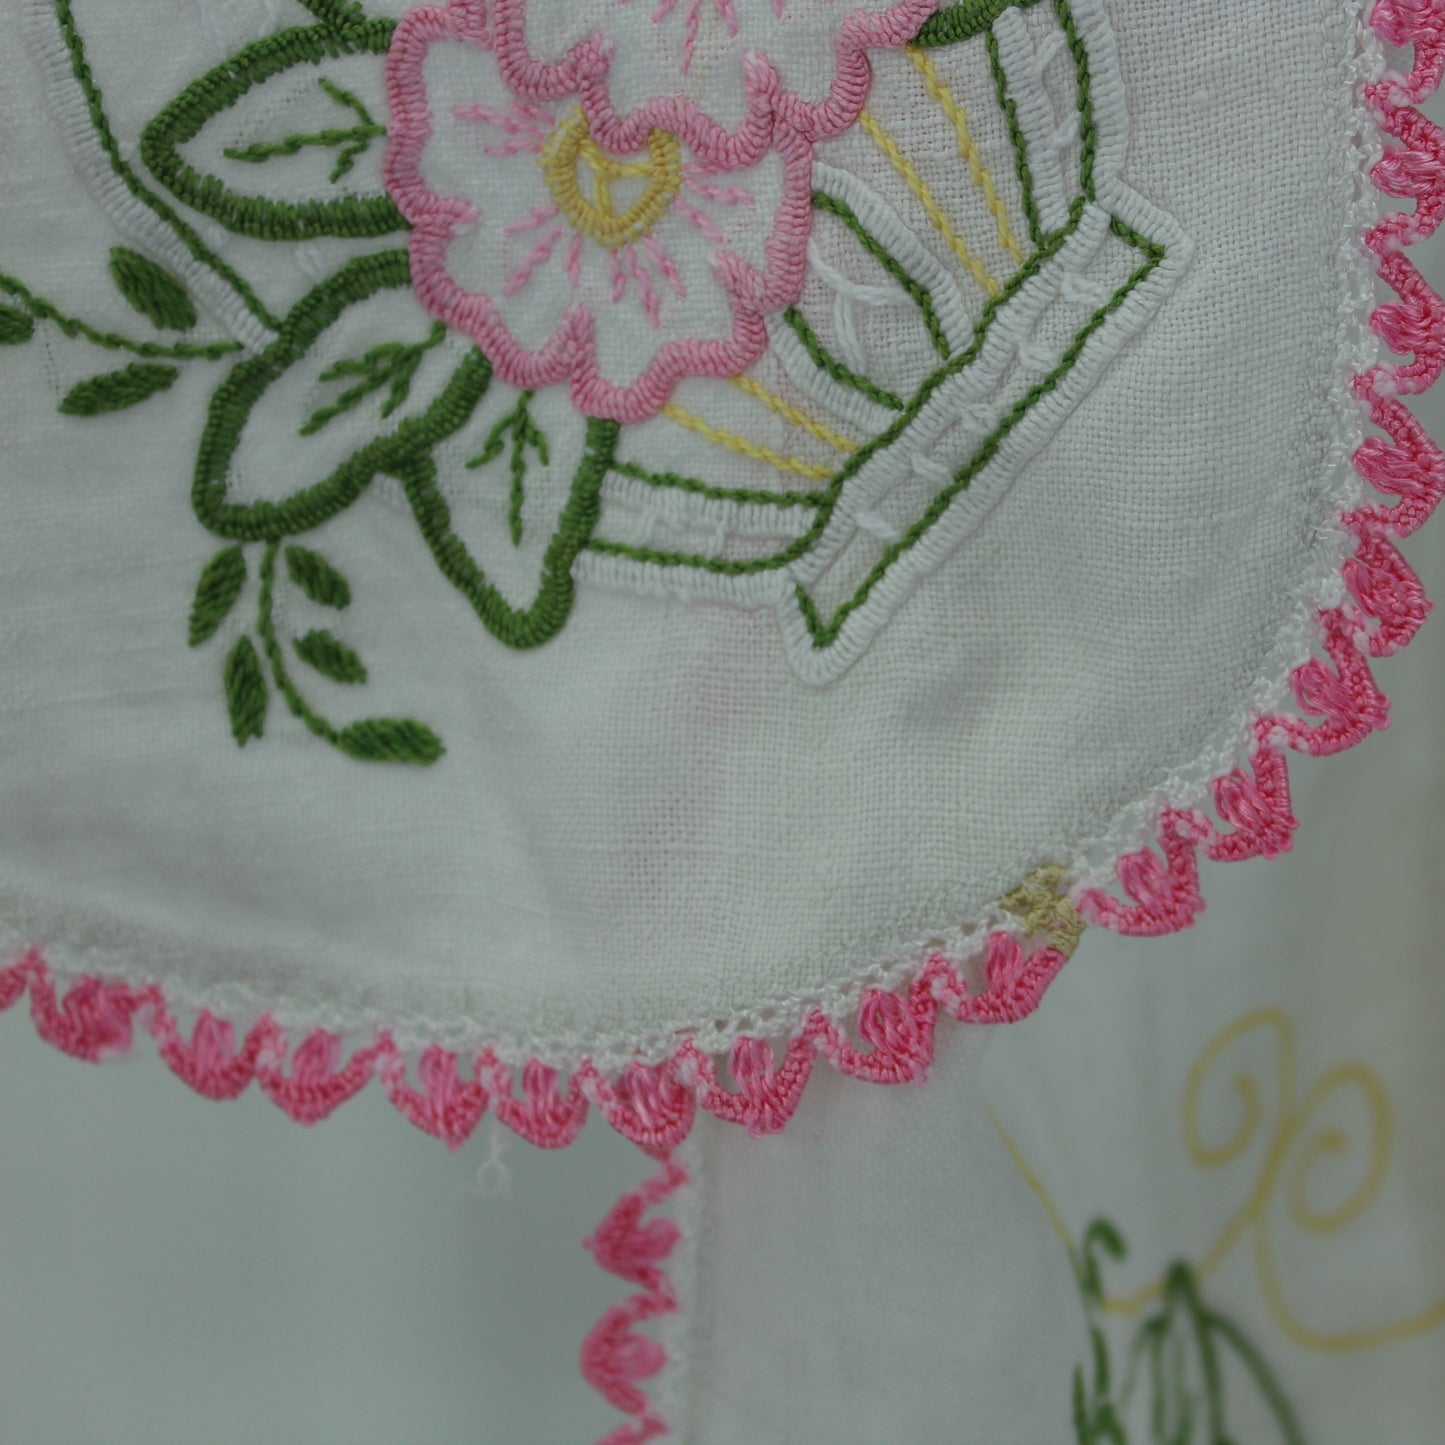 White Linen Table Center Runner Embroidered Flower Baskets Pink Green Crochet Edging closeup of small stain